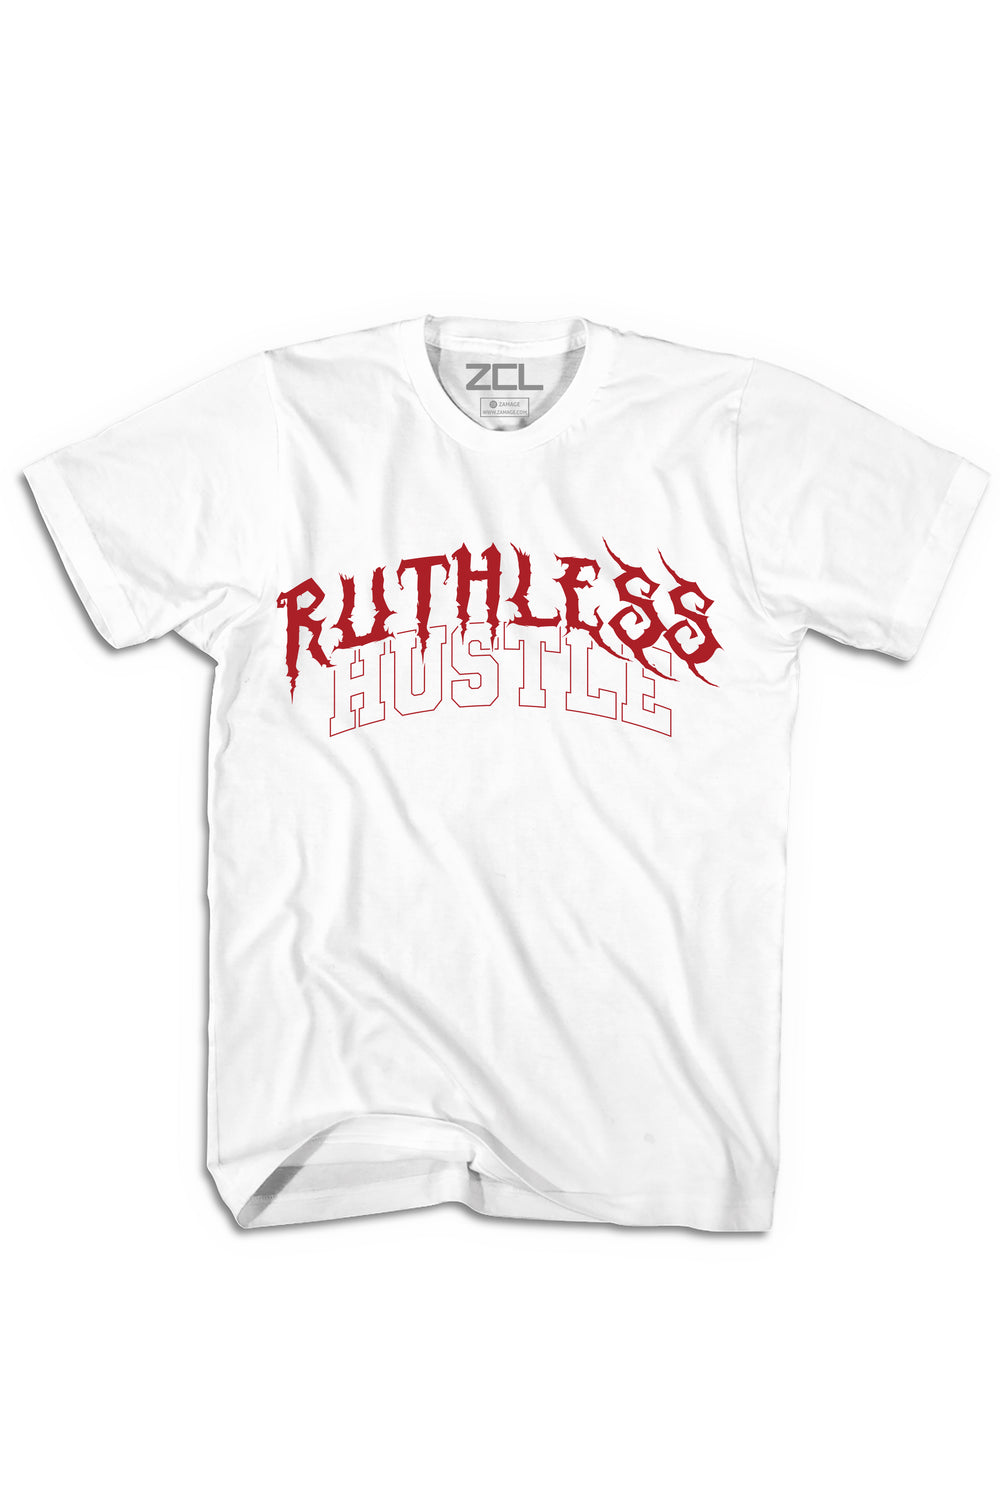 Ruthless Hustle Tee (Red Logo)